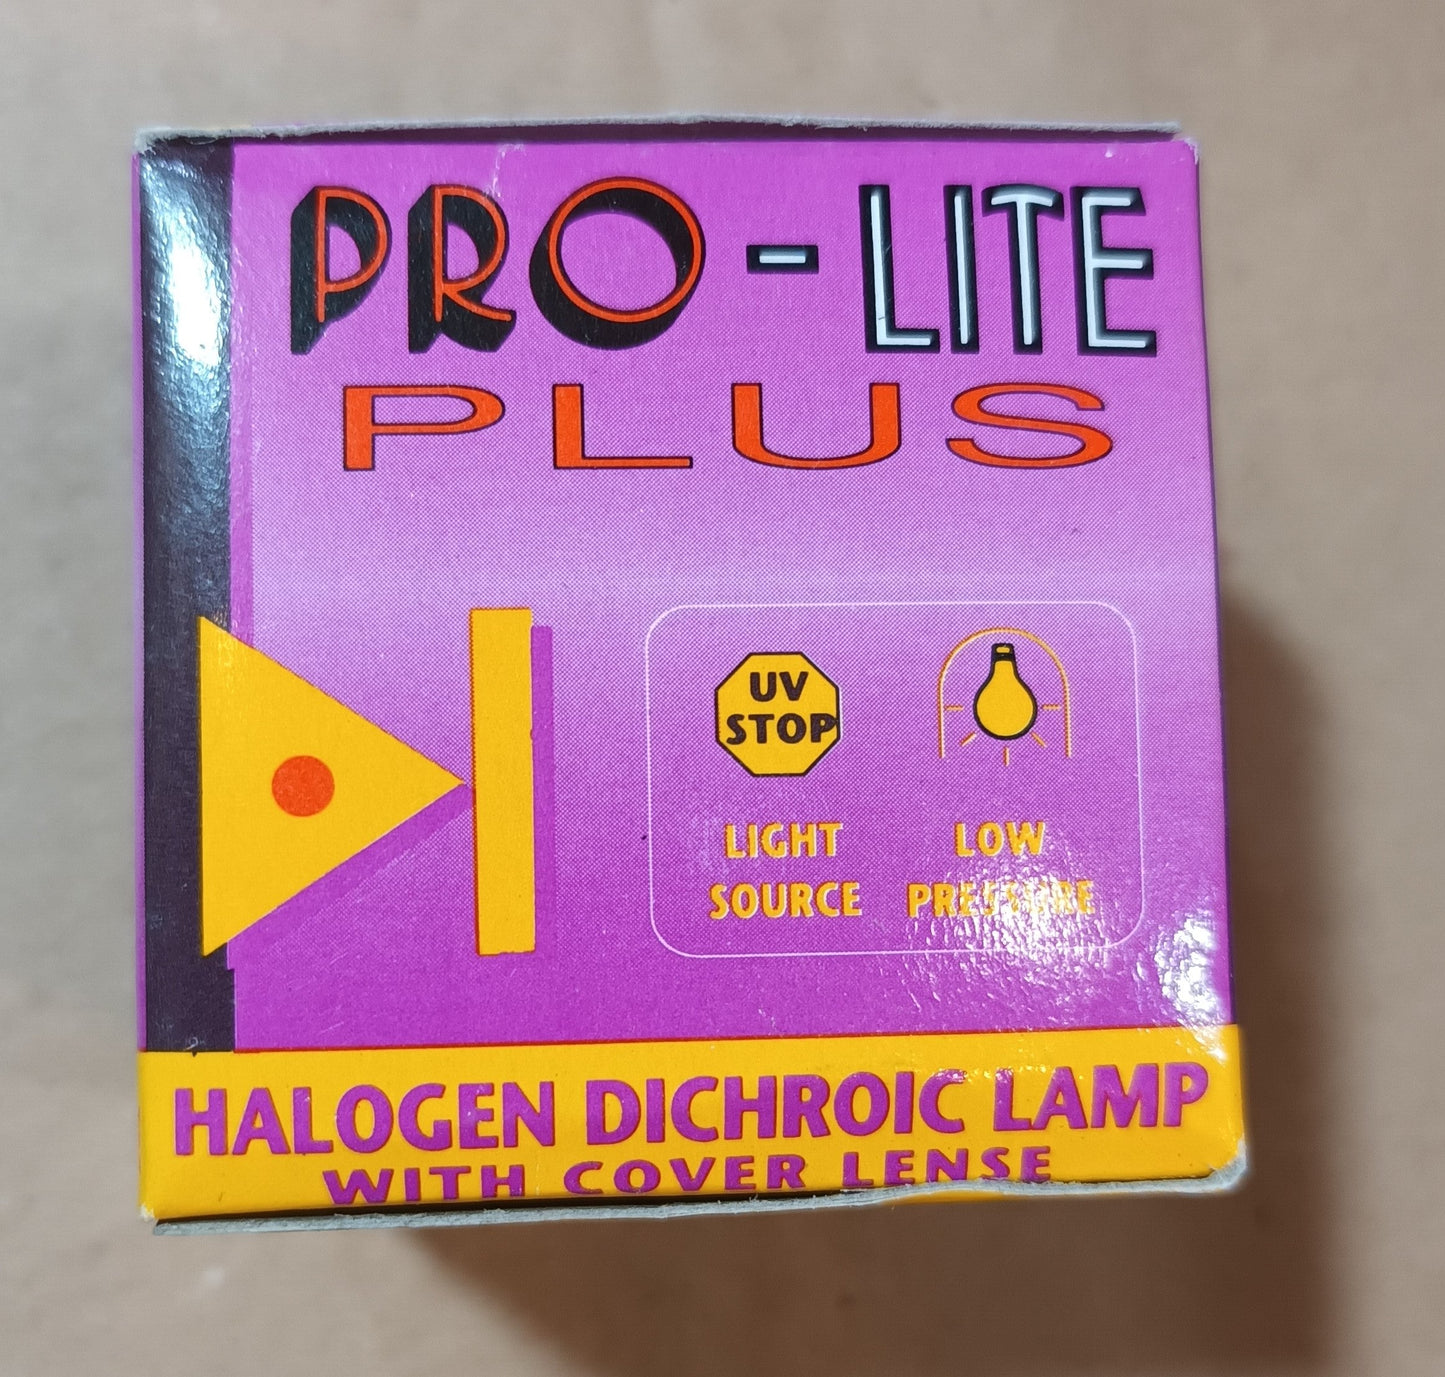 MR11 35 W 12 volt Halogen Dichroic Lamp 30</p>°Degree Beam by Pro-lite